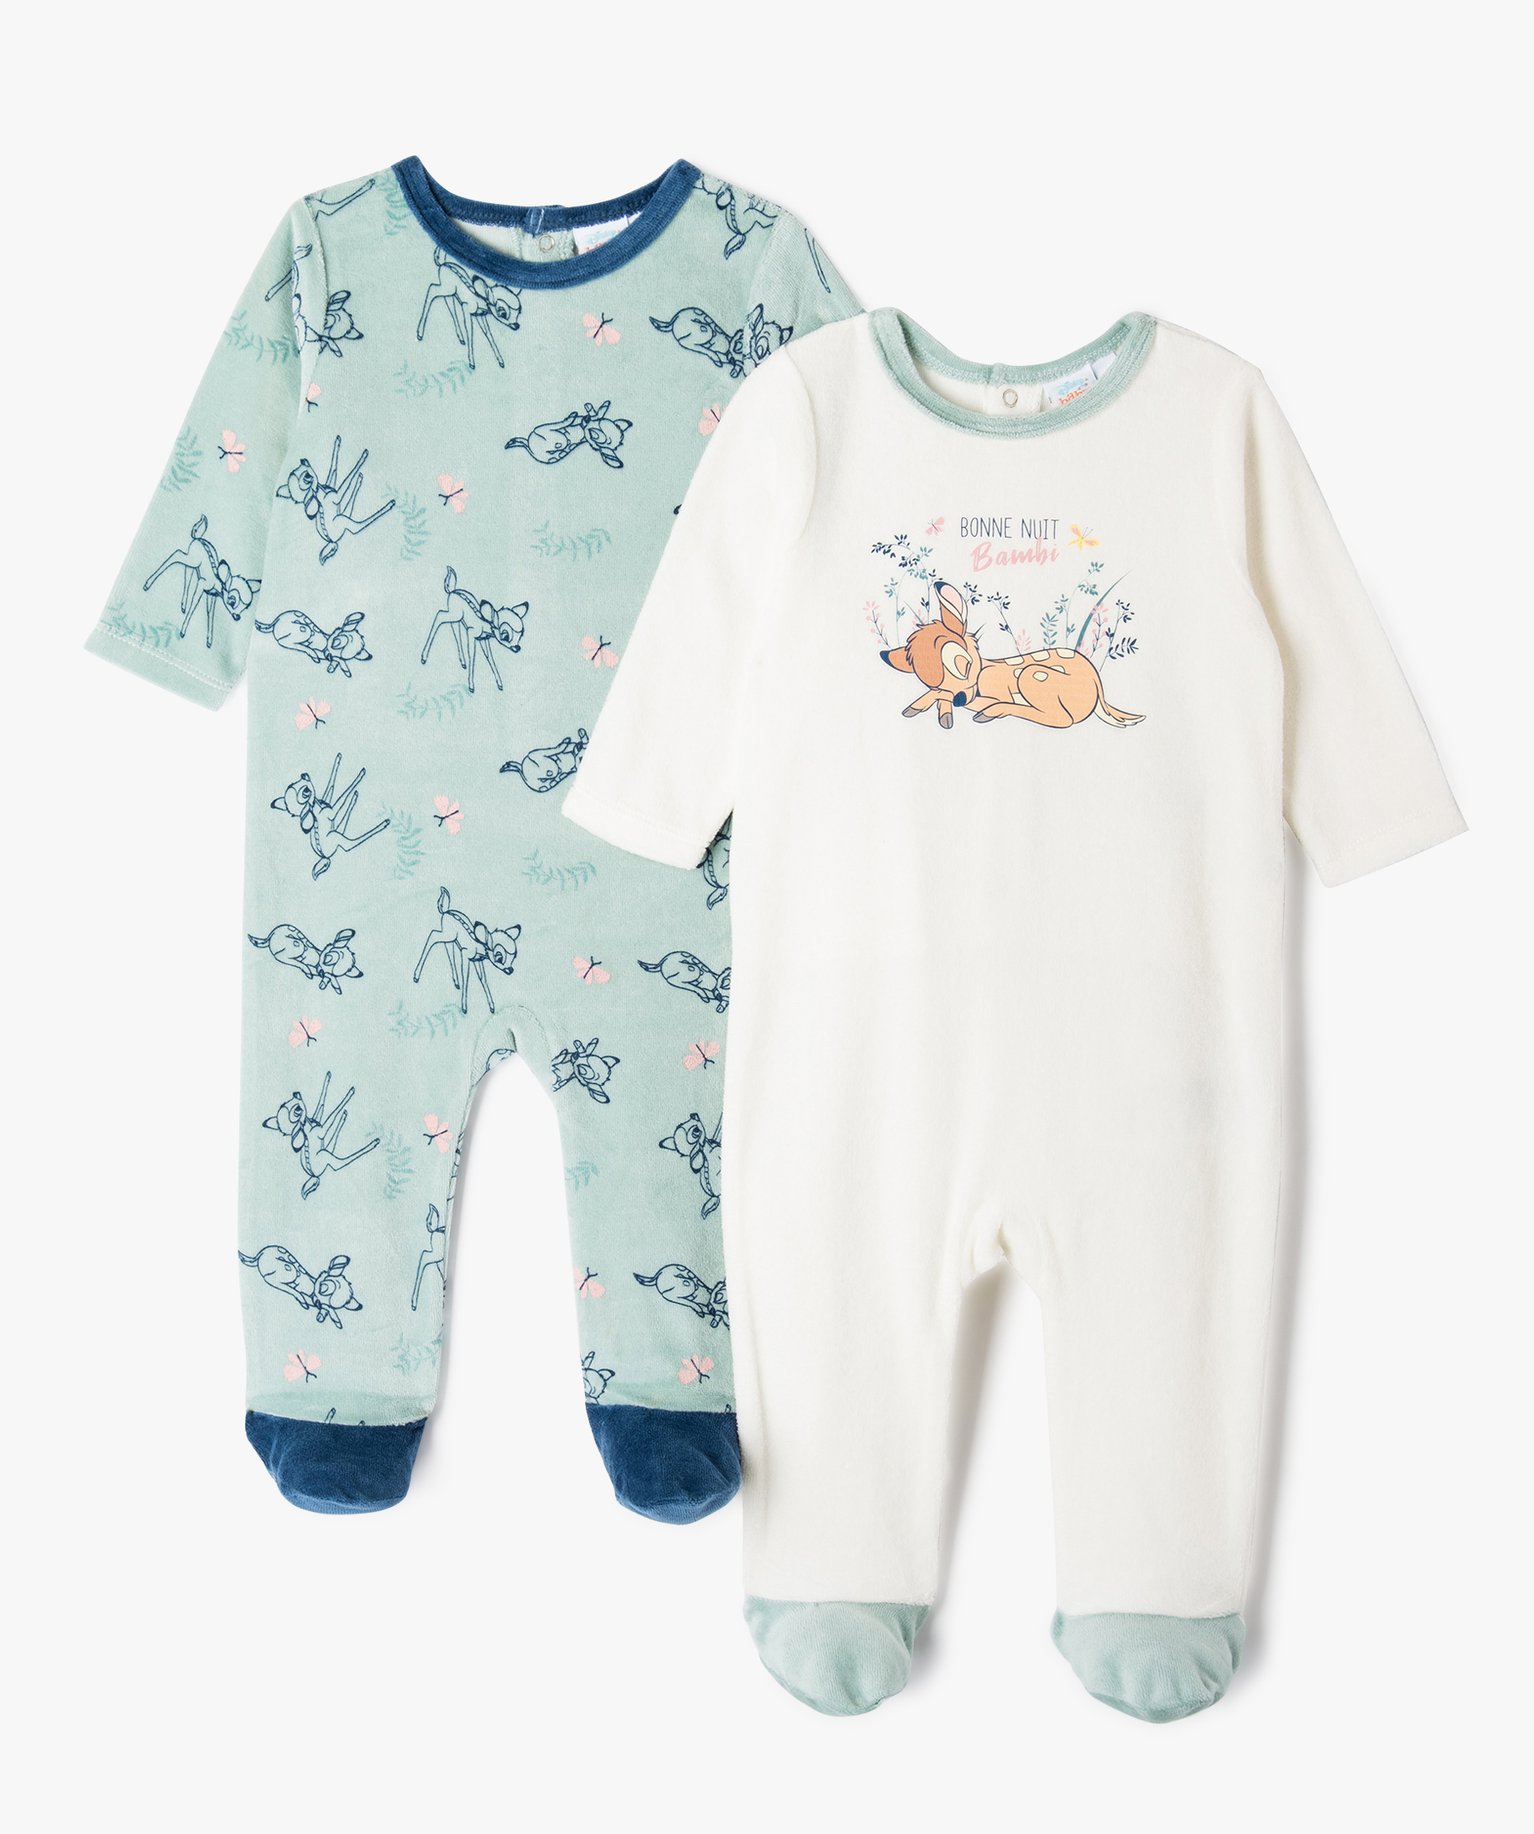 Pyjama dors bien avec motifs Bambi bébé fille (lot de 2) - Disney Baby - 1M - ecru - DISNEY BABY